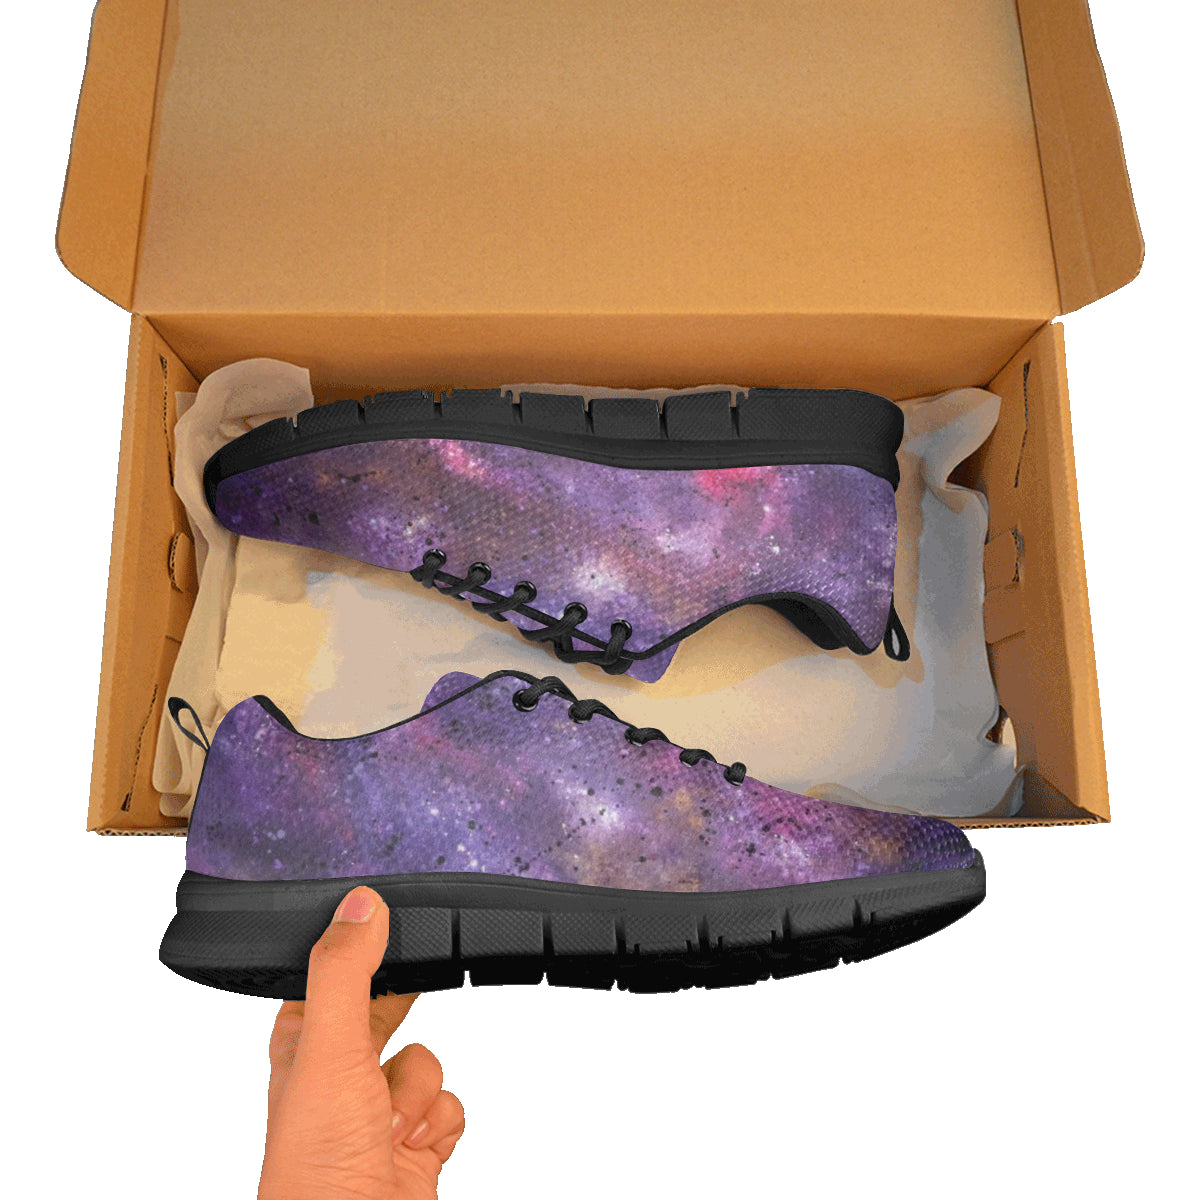 Sneakers Violet universe